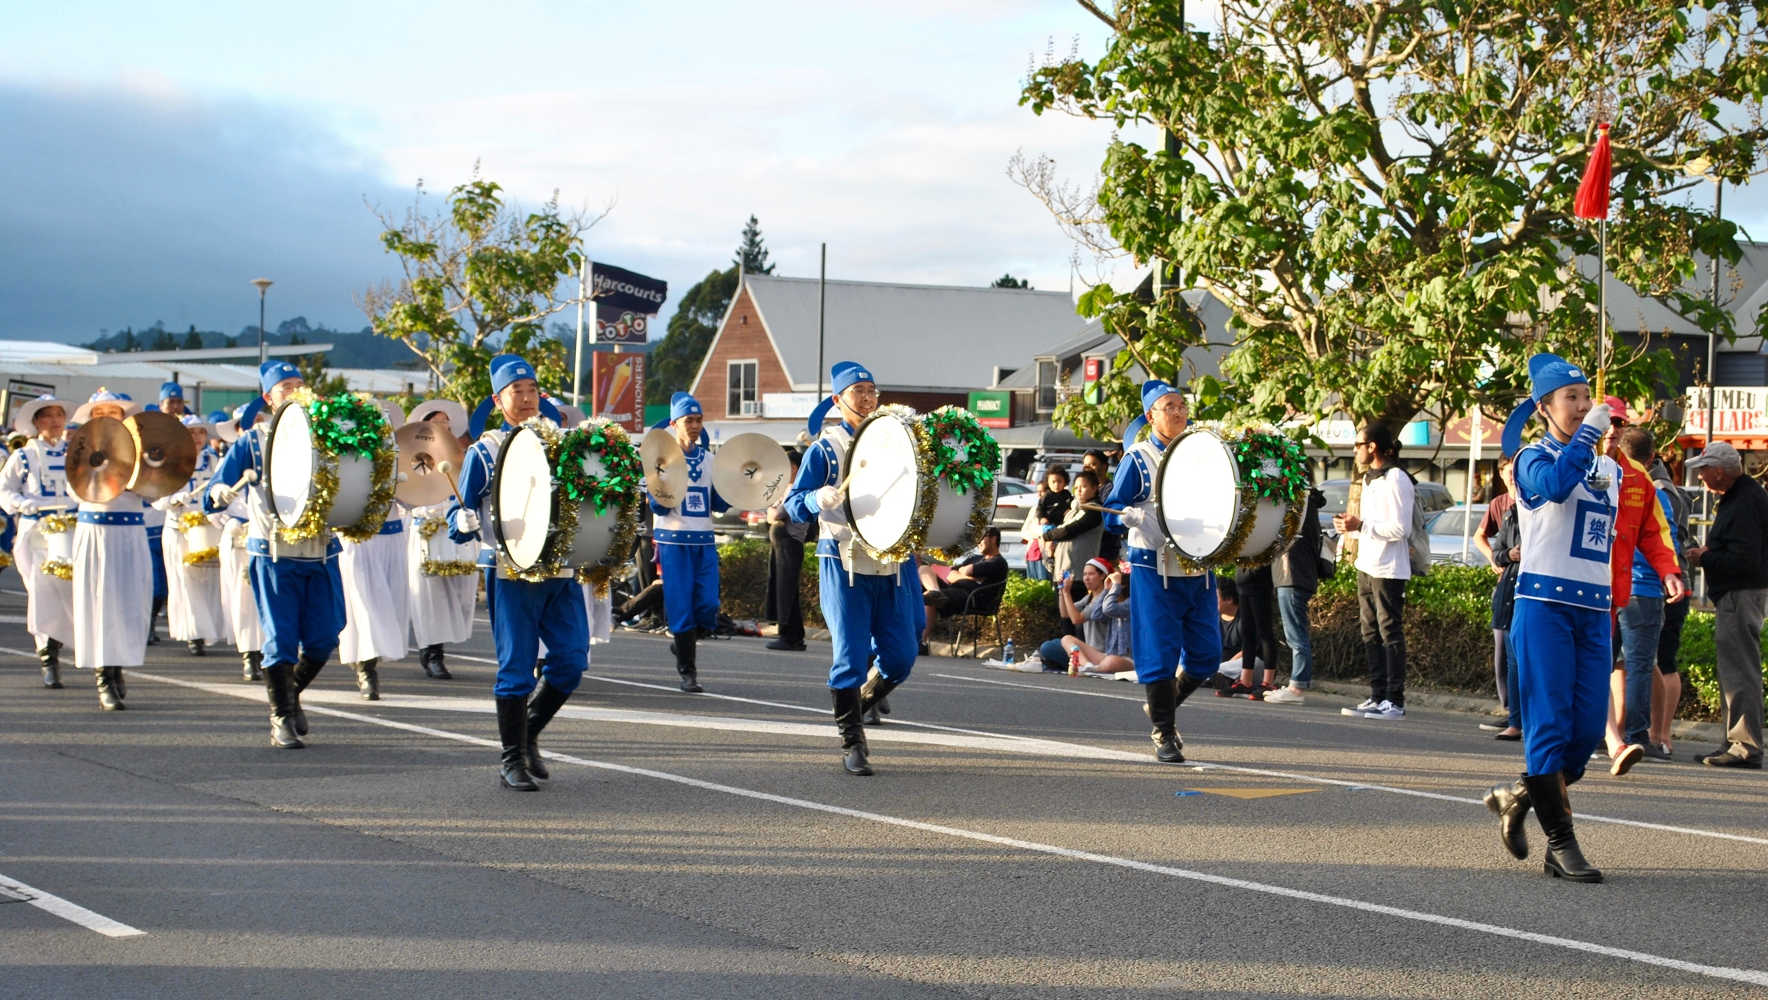 Hari Krishna band marching during a Christmas street parade in Kumeu Auckland New zealand